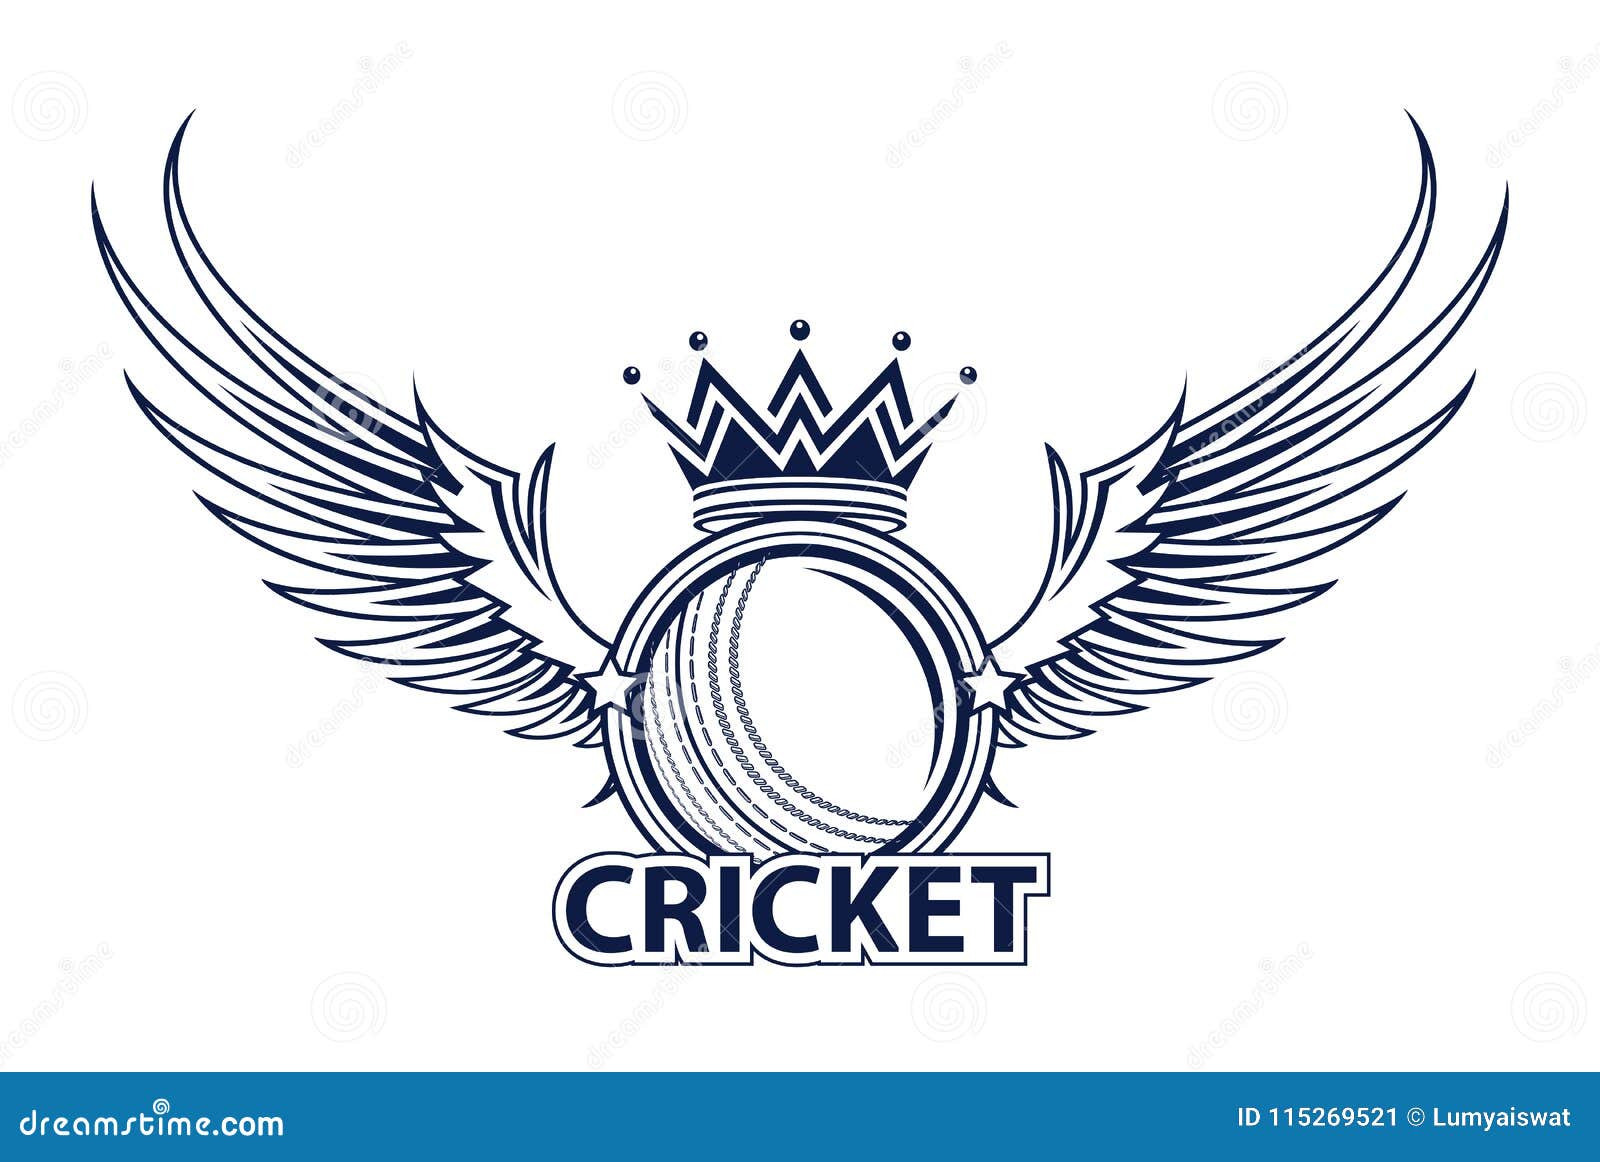 772 Cricket Logo Shield Images, Stock Photos & Vectors | Shutterstock